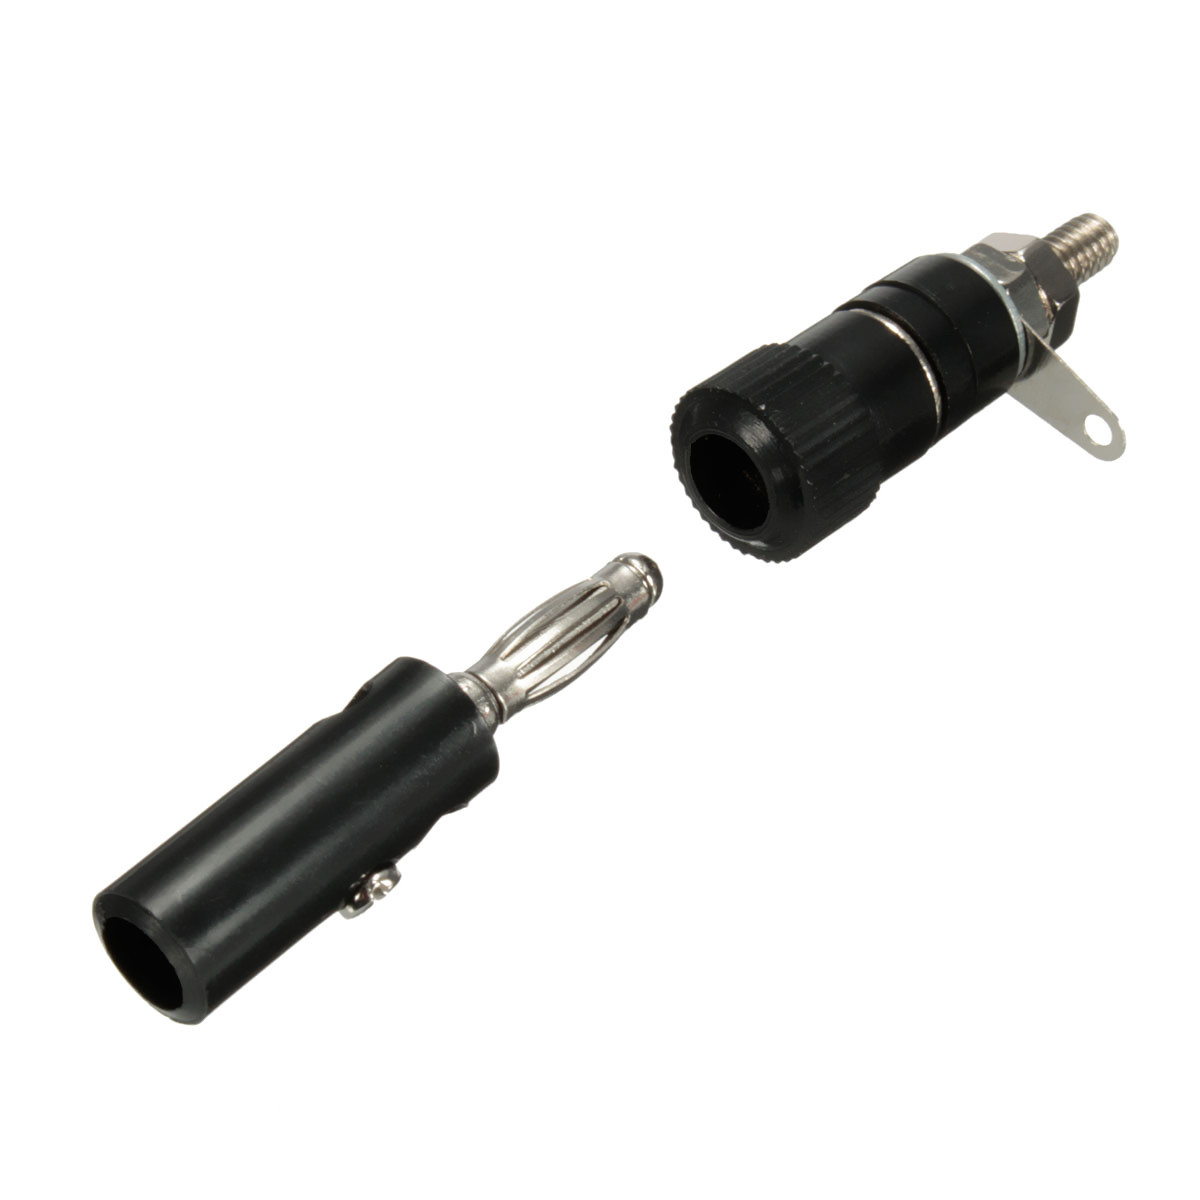 DANIU-30-Pairs-4mm-Terminal-Banana-Plug-Socket-Jack-Connectors-Instrument-Light-Tools-Black-and-Red-1358117-6